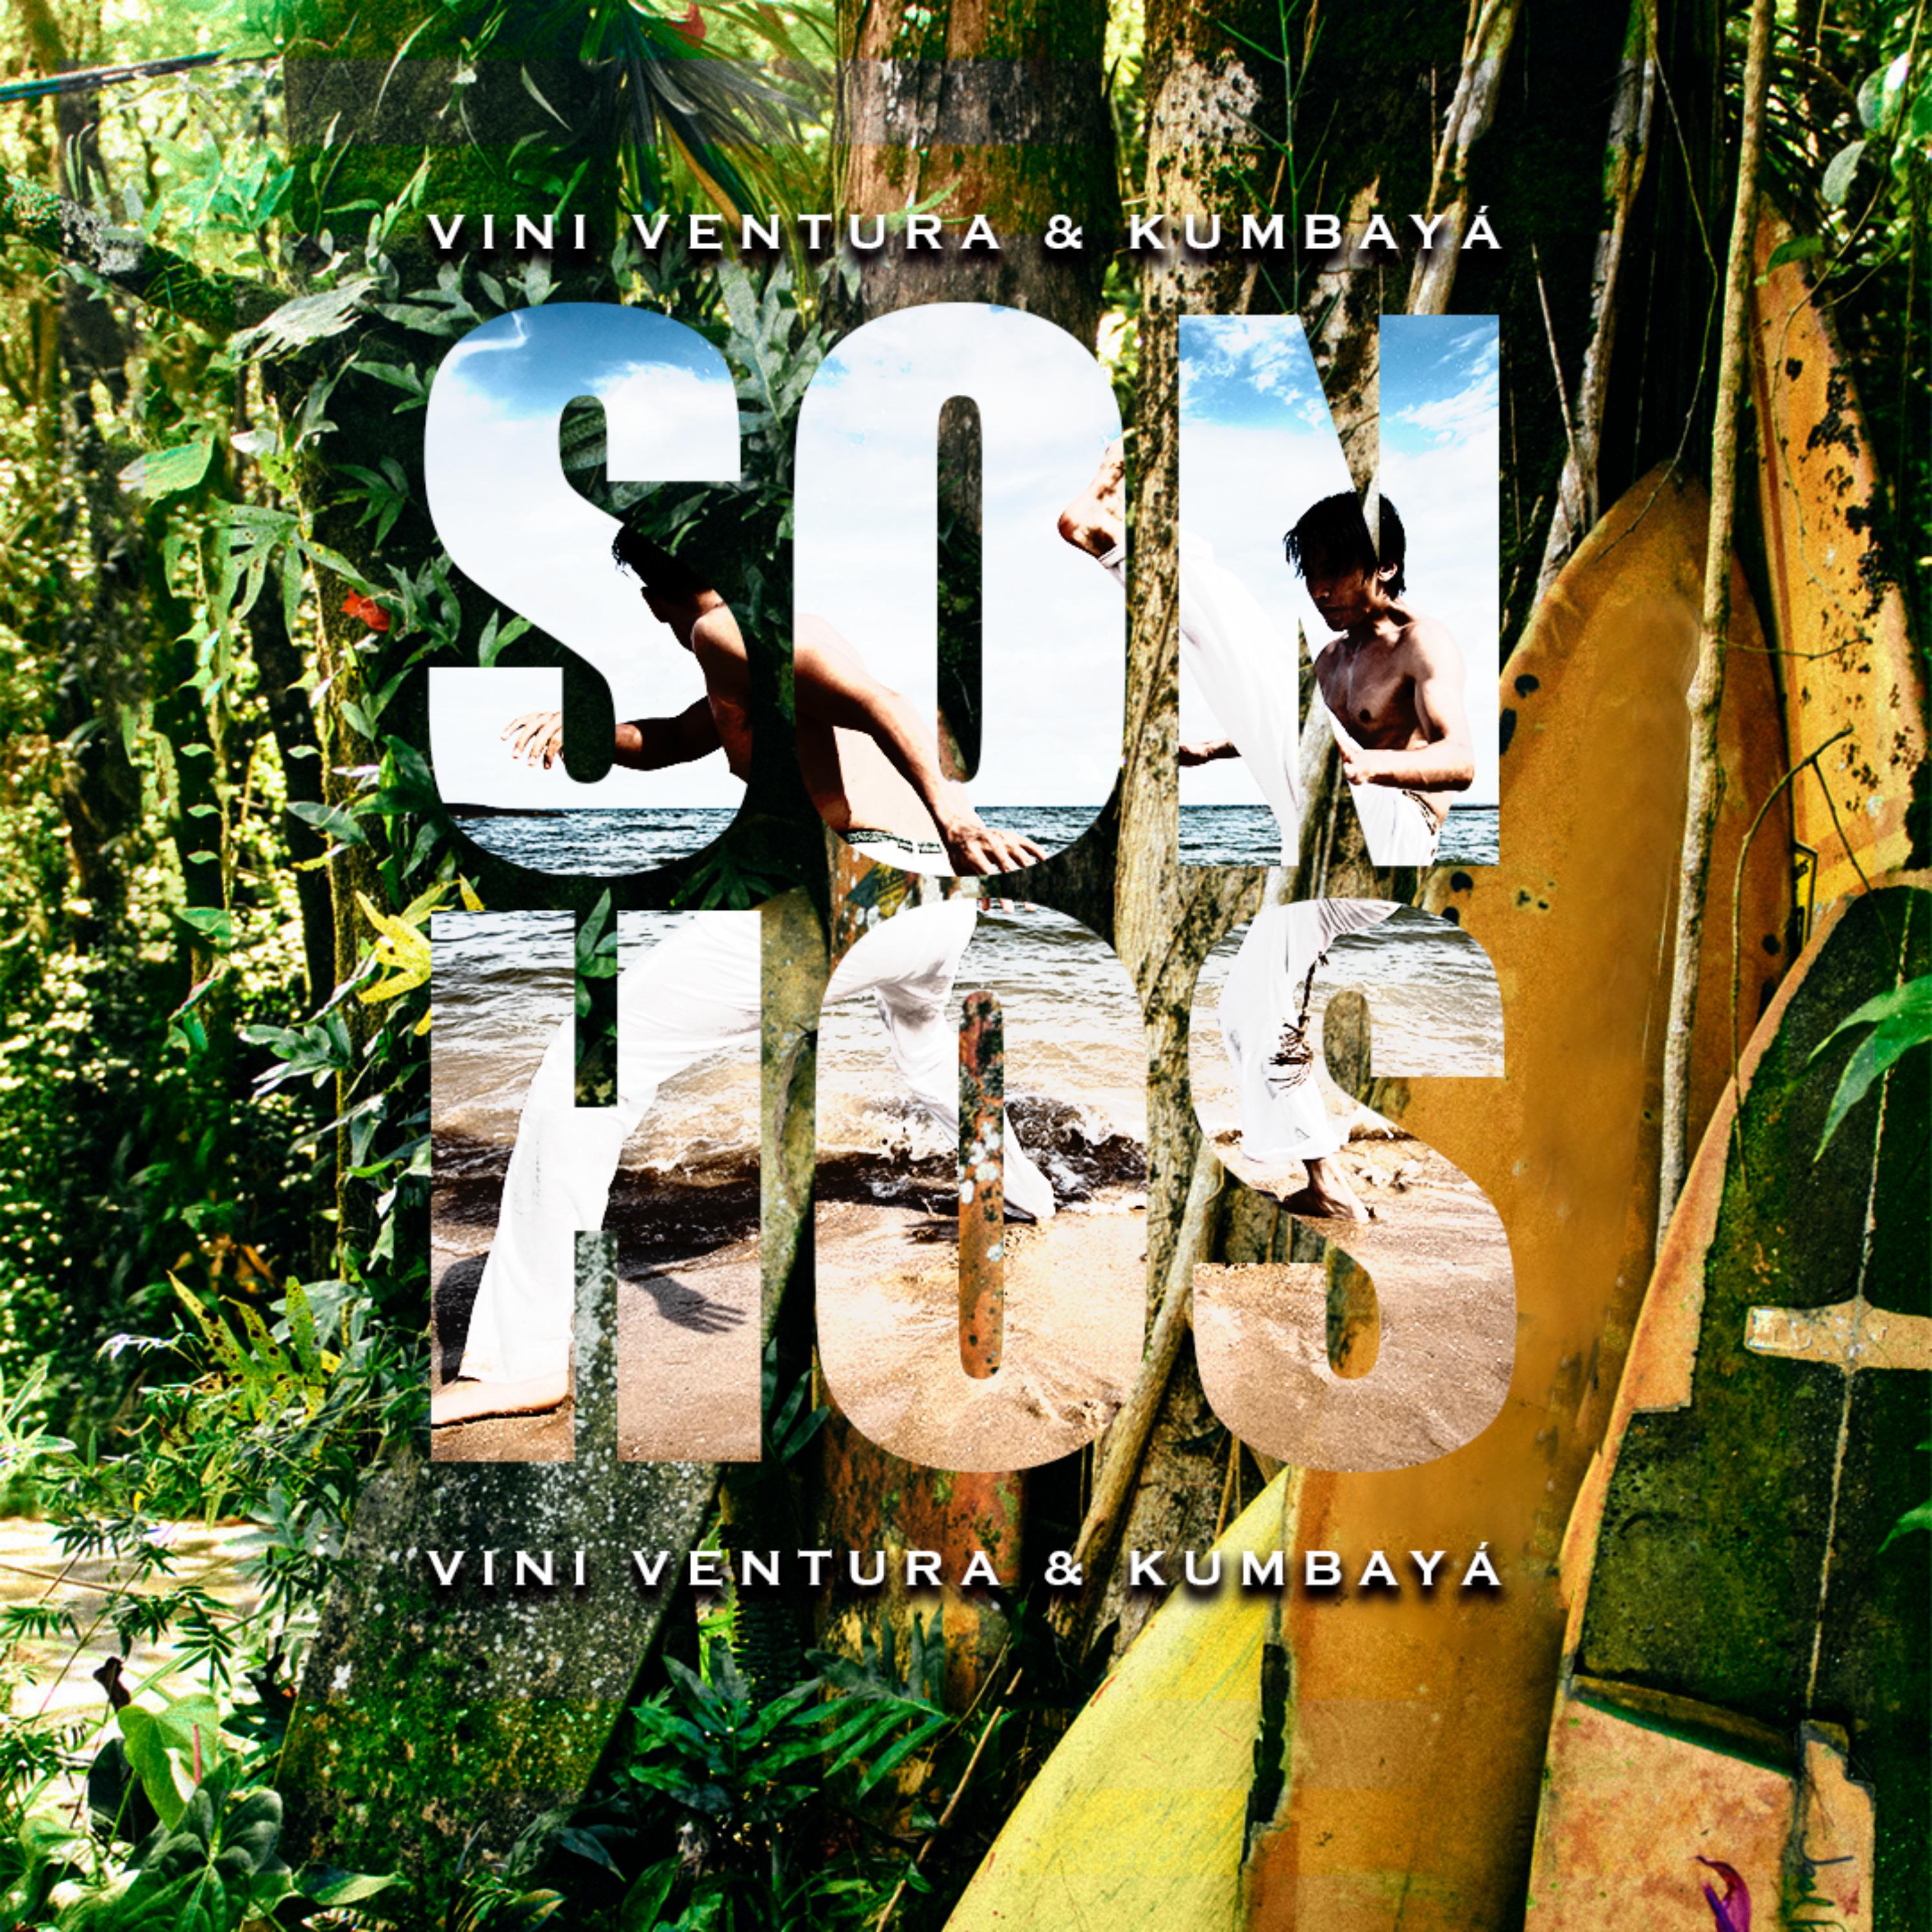 Постер альбома Sonhos